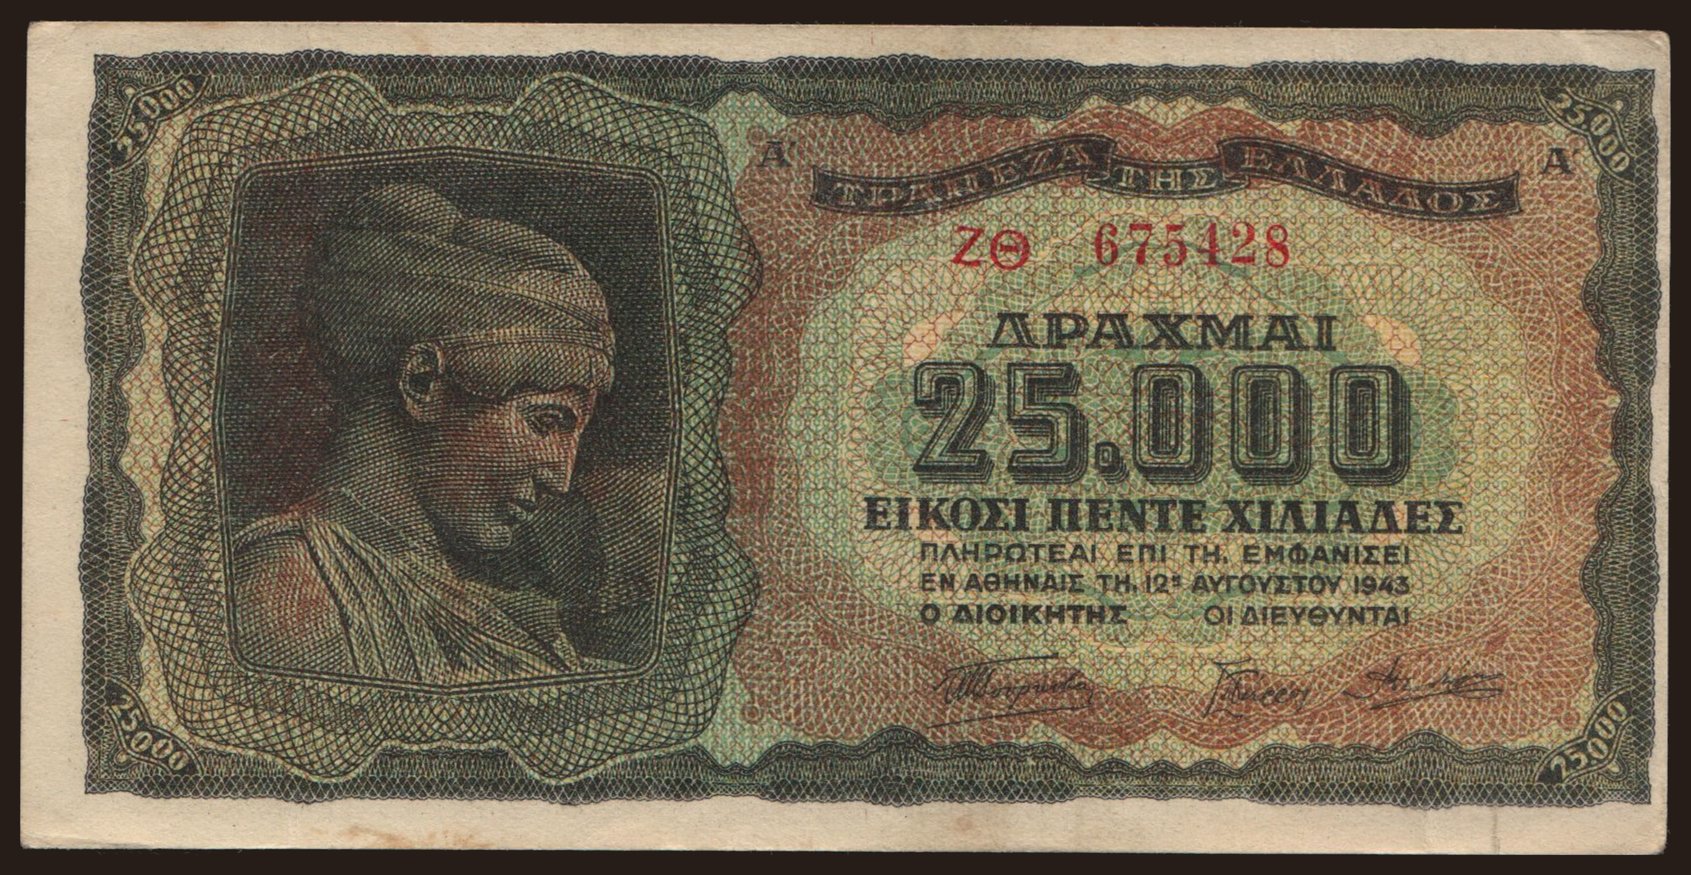 25.000 drachmai, 1943